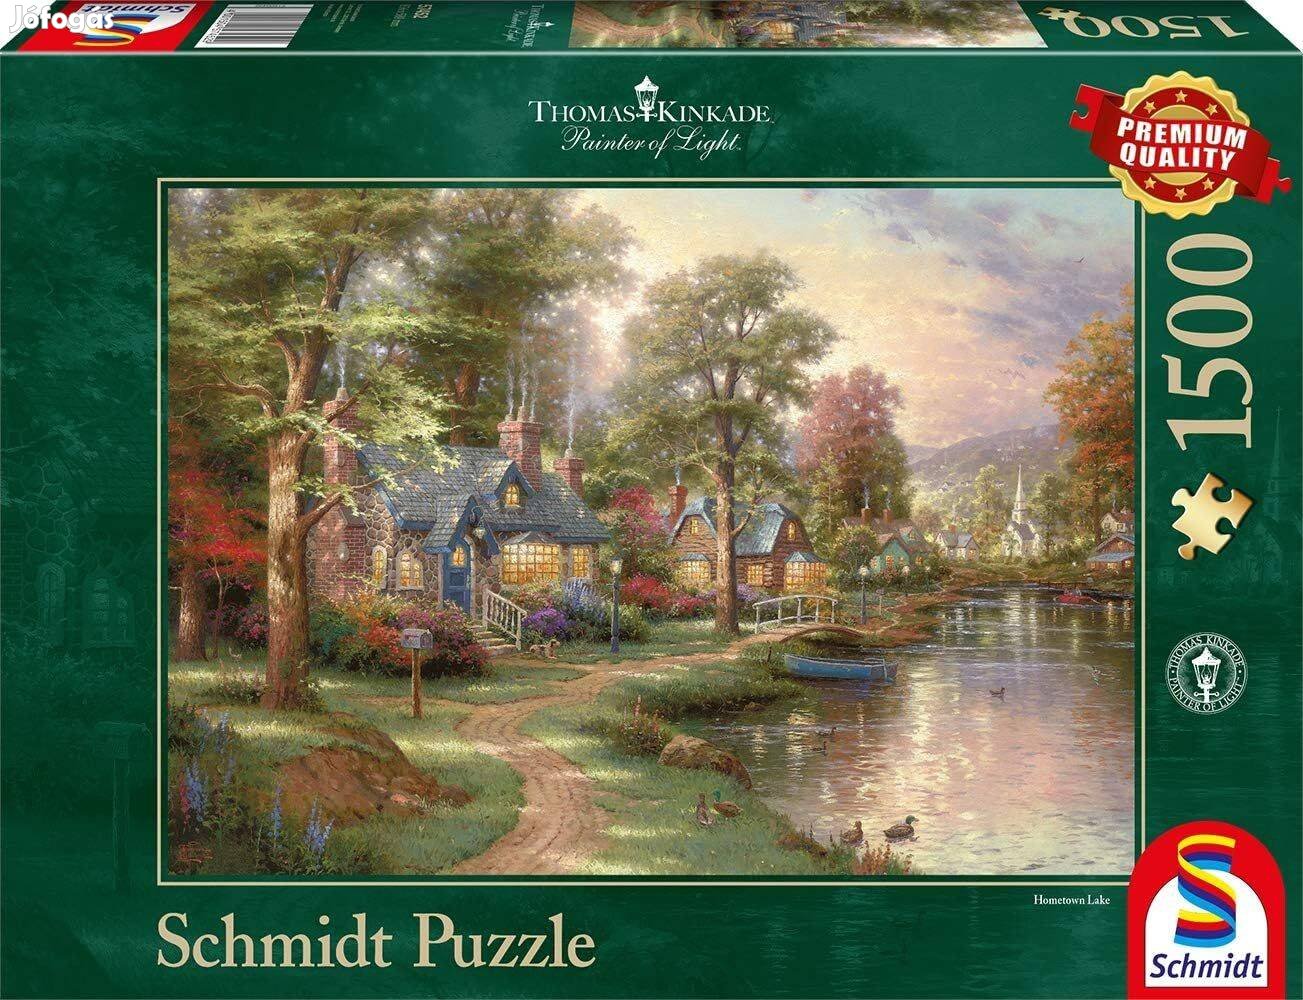 Thomas Kinkade Puzzle (Schmidt, hiánytalan)